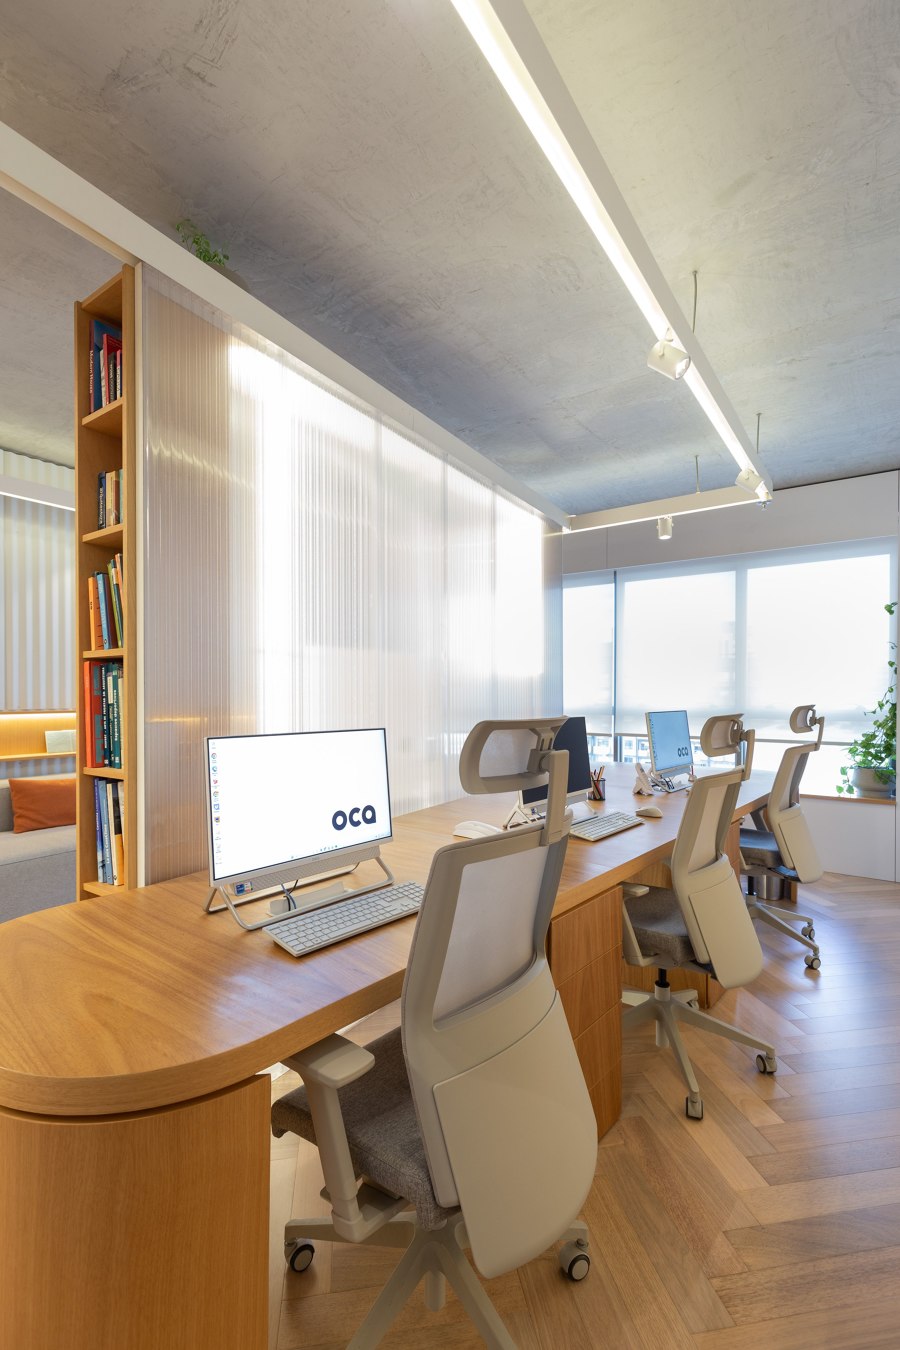 OCA Office Headquarters 03 de Oficina Conceito Arquitetura | Bureaux